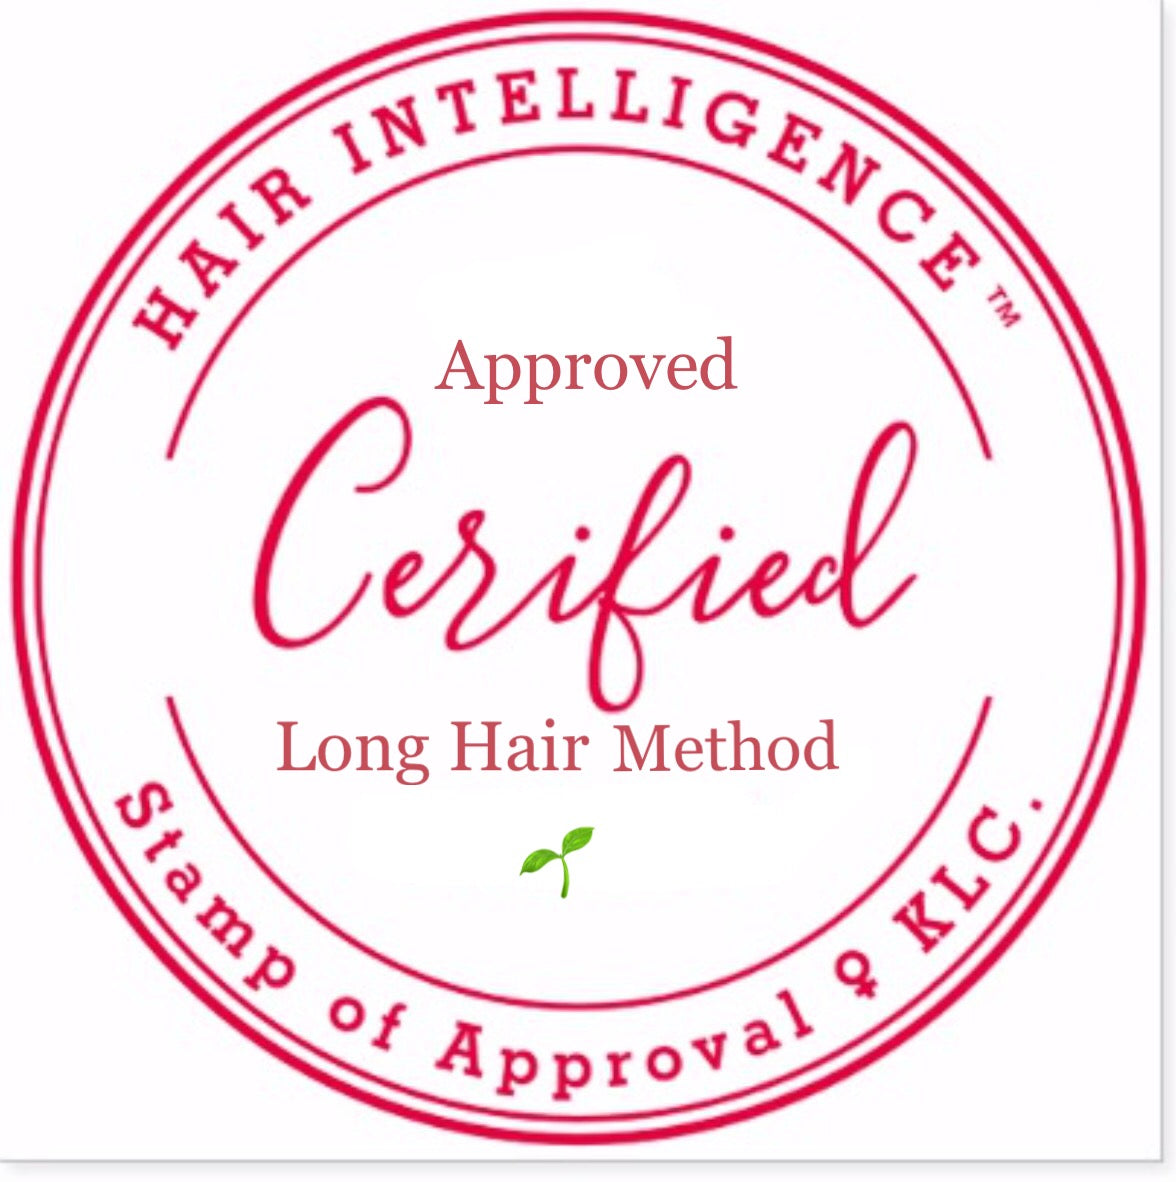 Be "Certified" in the Hair Intelligence Method - Tier 1